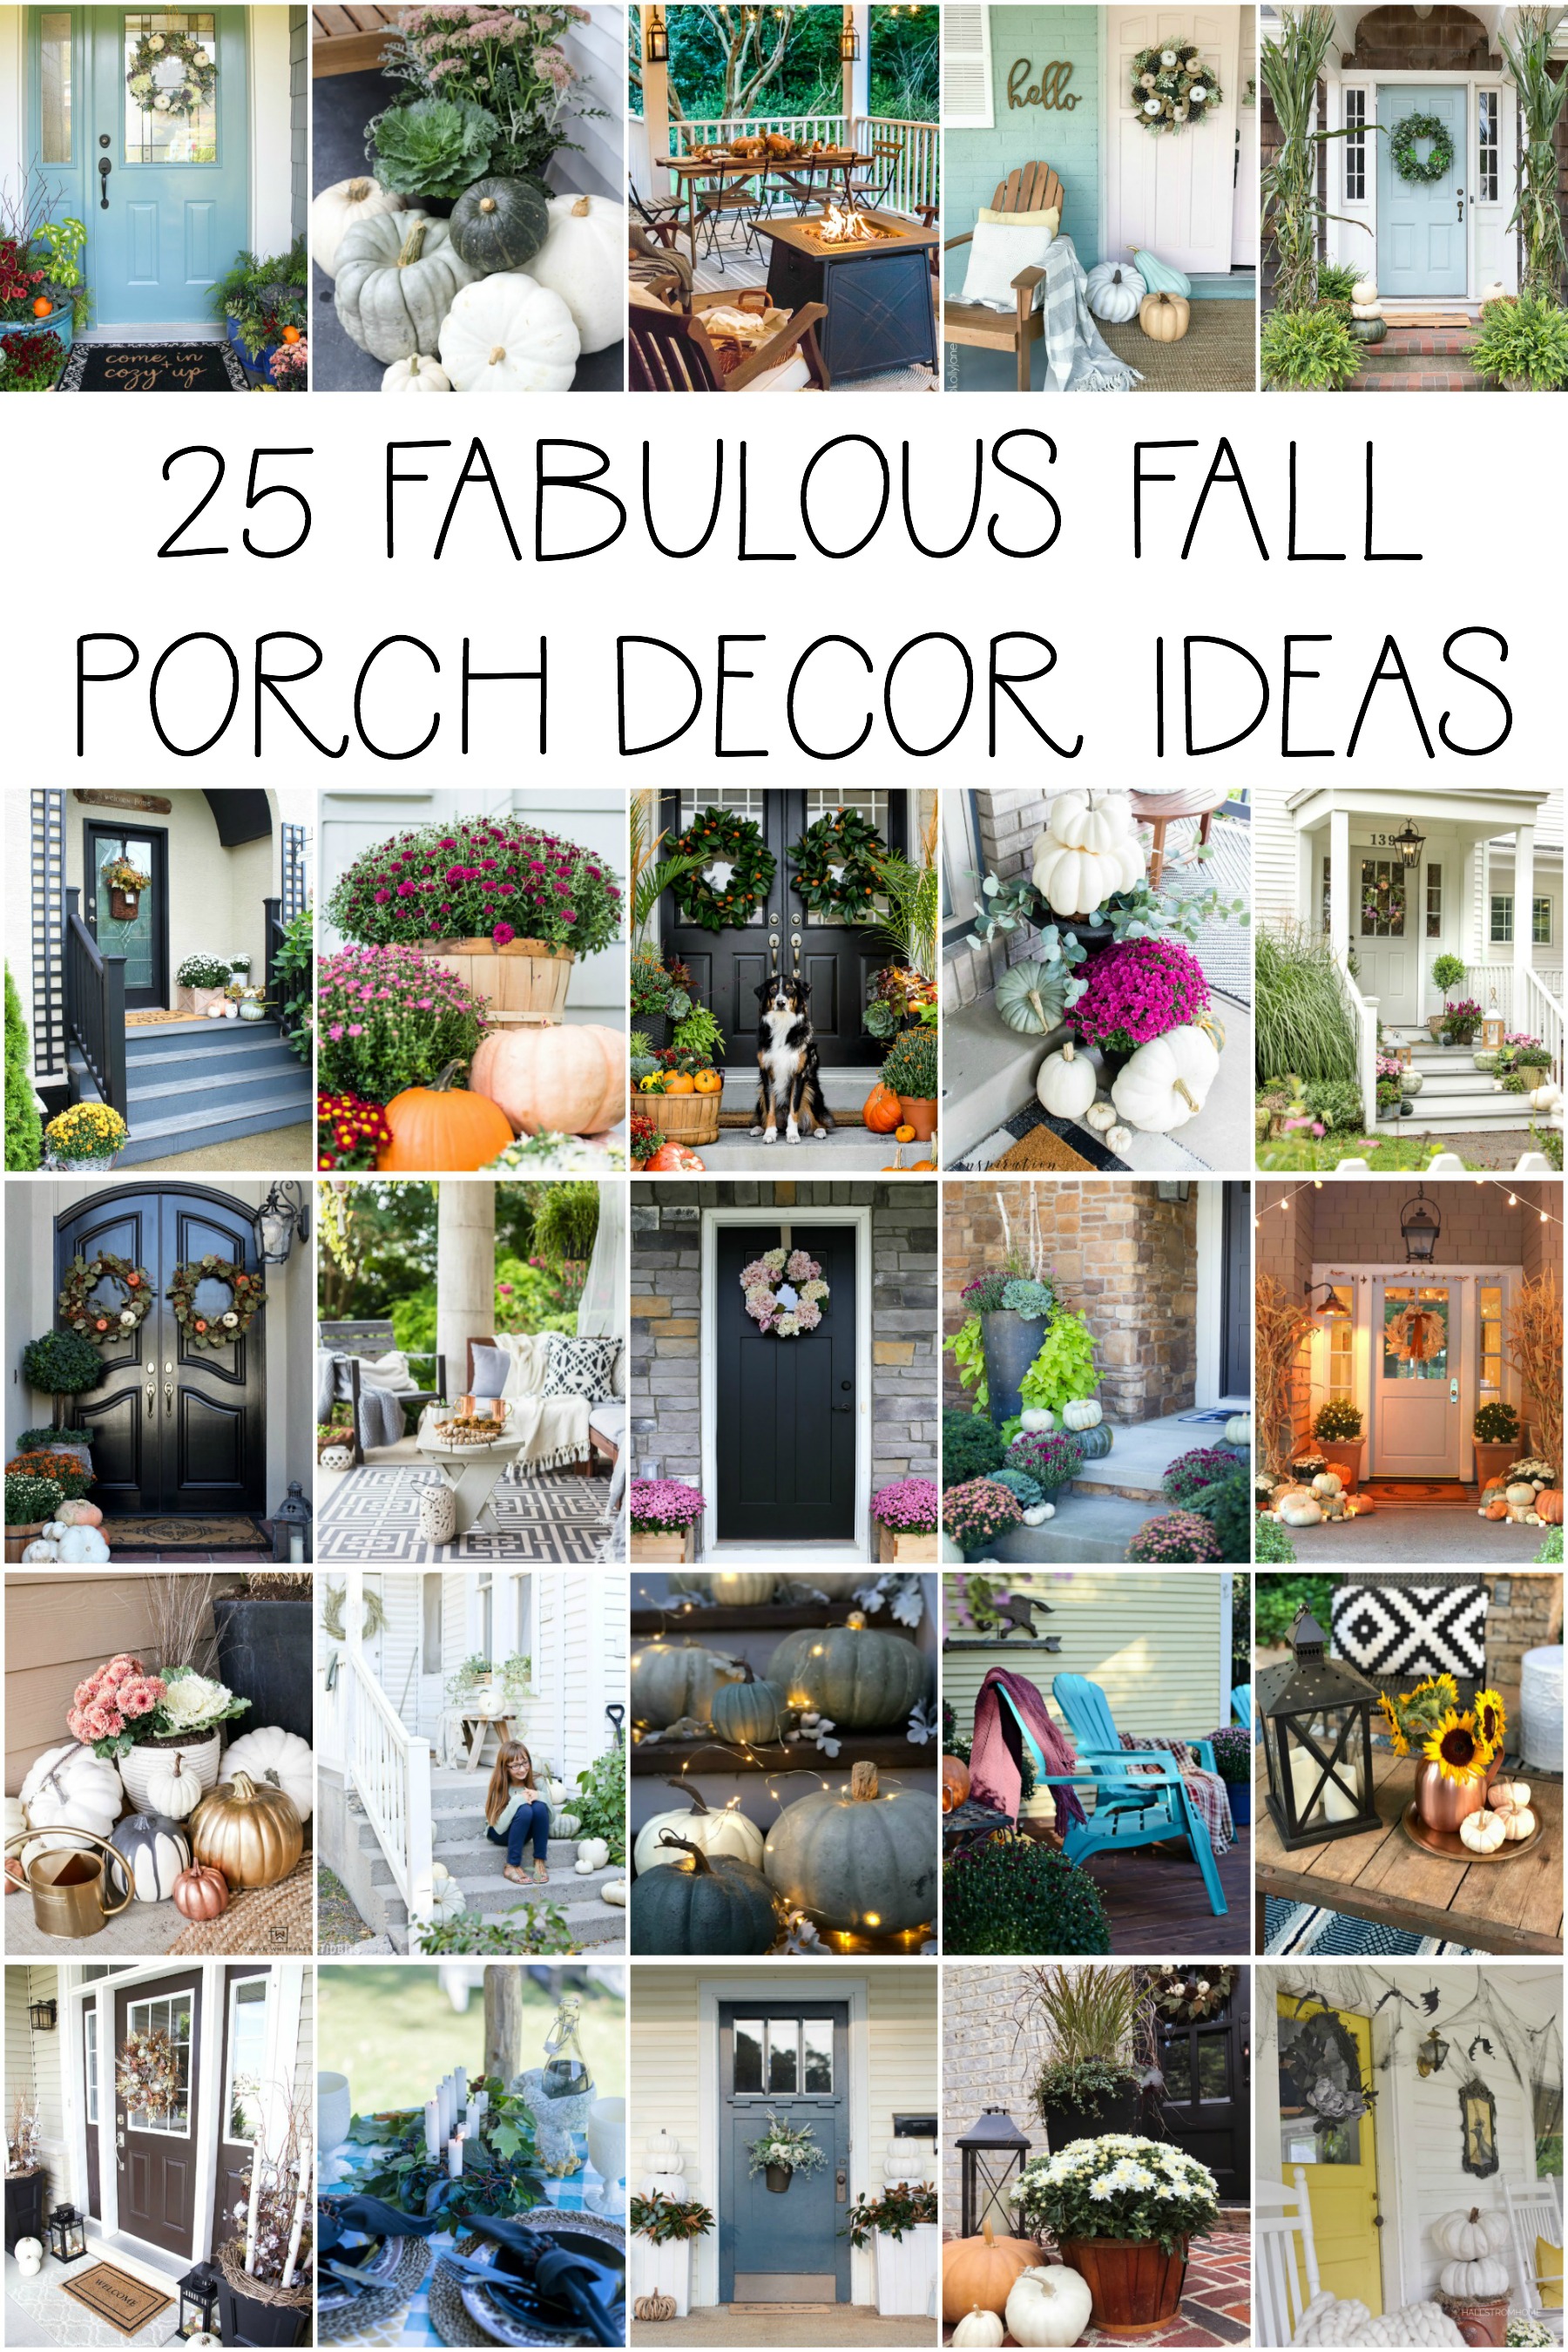 25 Fabulous Fall Porch Decor Ideas poster.